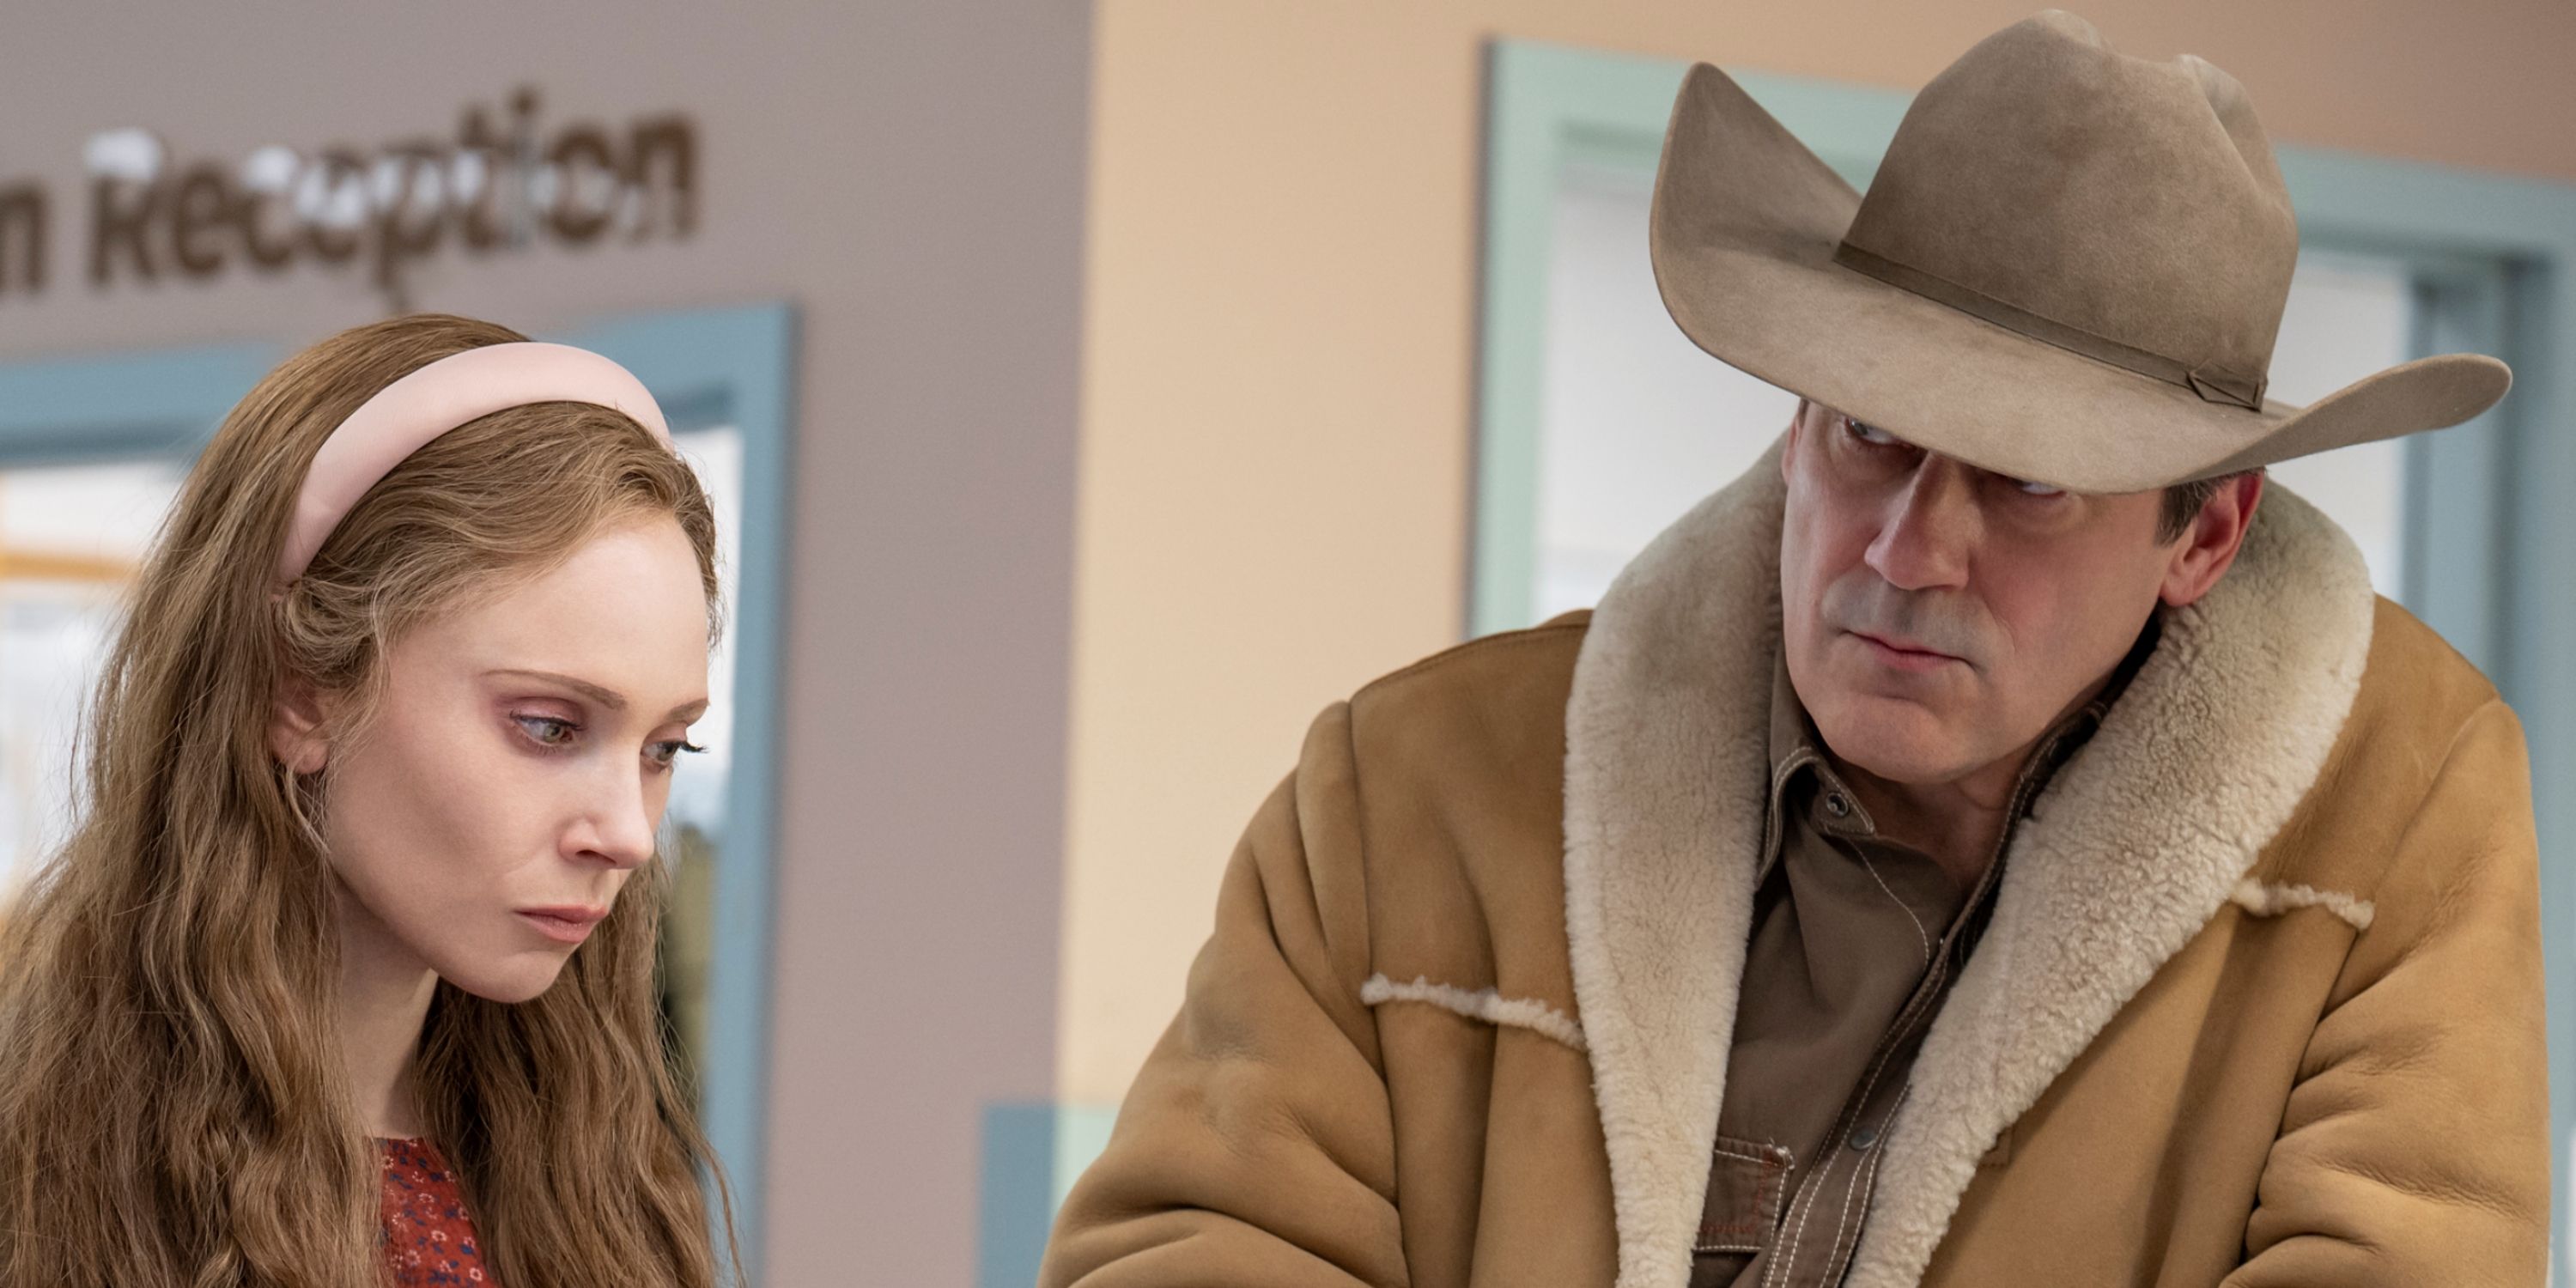 June Temple as Dot Lyon and Jon Hamm as Roy Tillman in Episode 8 of Fargo: Year 5